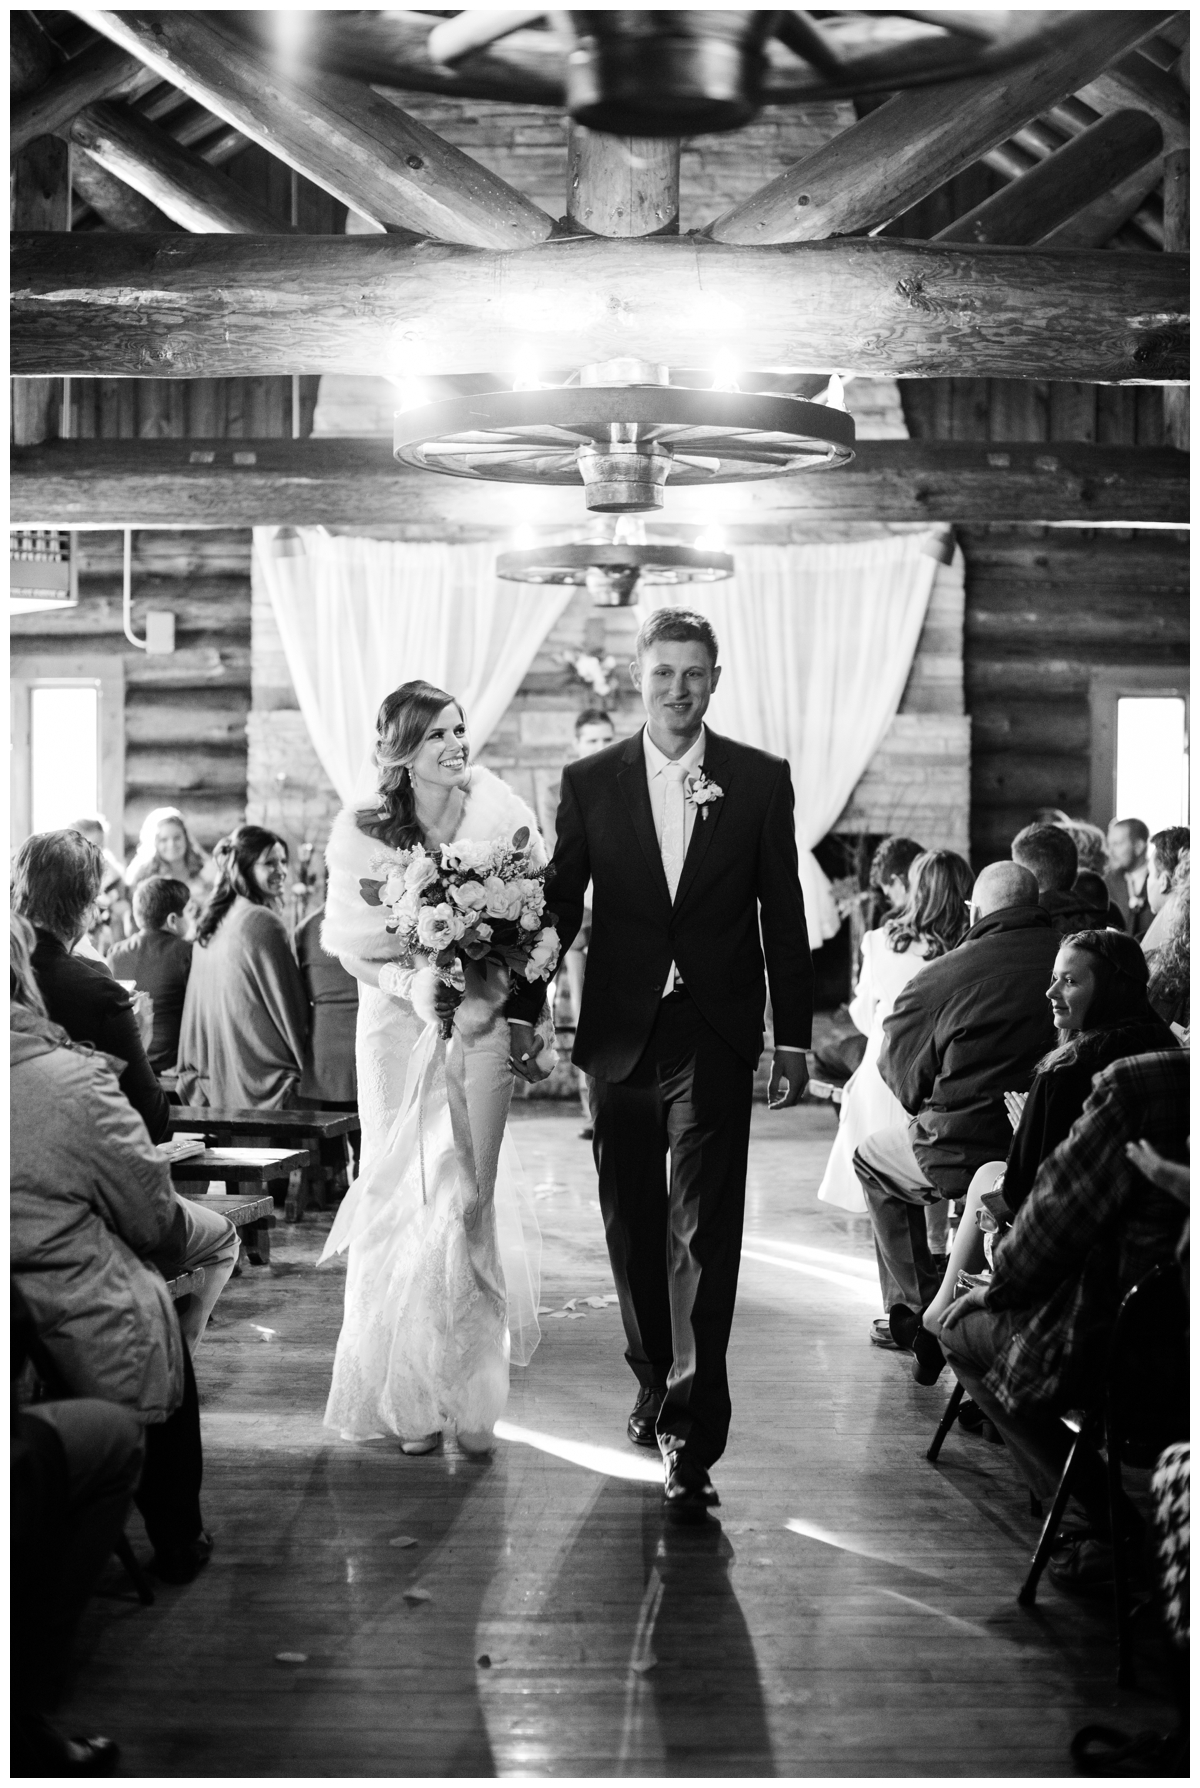 ALEX CODY WINTER WEDDING MEGHAN LEE HARRIS WISCONSIN RAPIDS YMCA CAMP ALEXANDER VENUE OUTDOOR DESTINATION PHOTOGRAPHER PHOTOGRAPHY